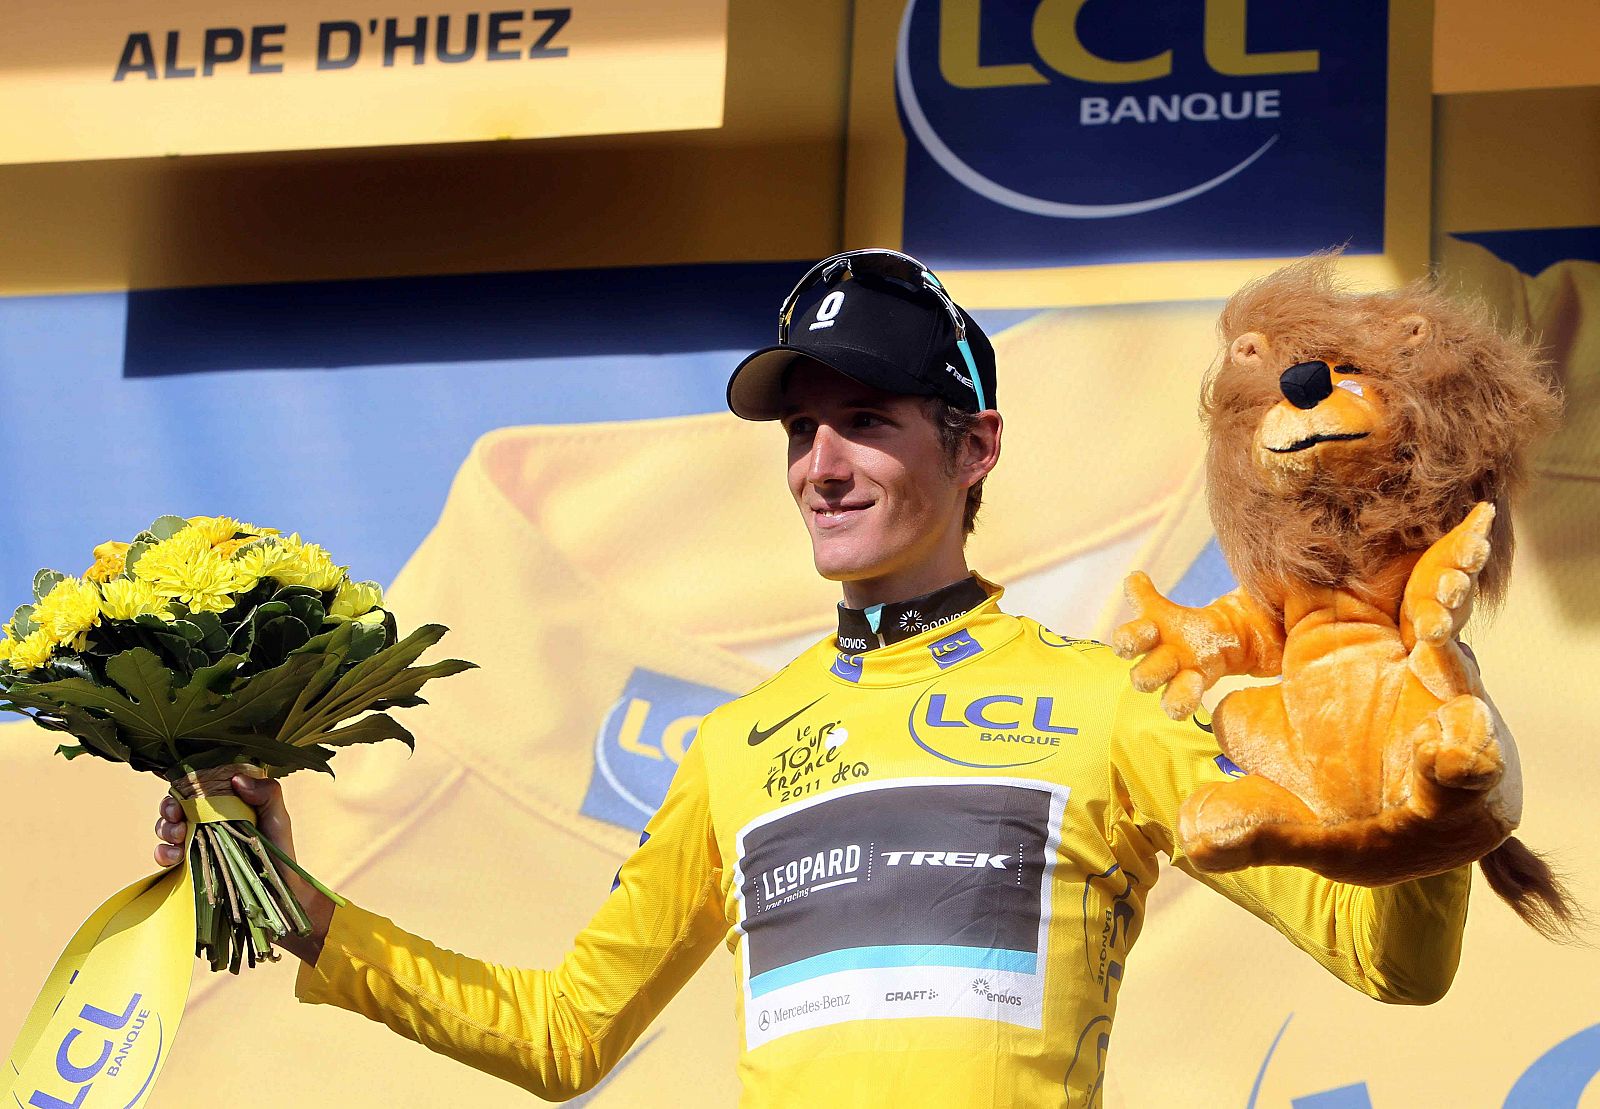 El ciclista luxemburgués Andy Schleck, tras recibir el maillot amarillo en Alpe d'Huez.